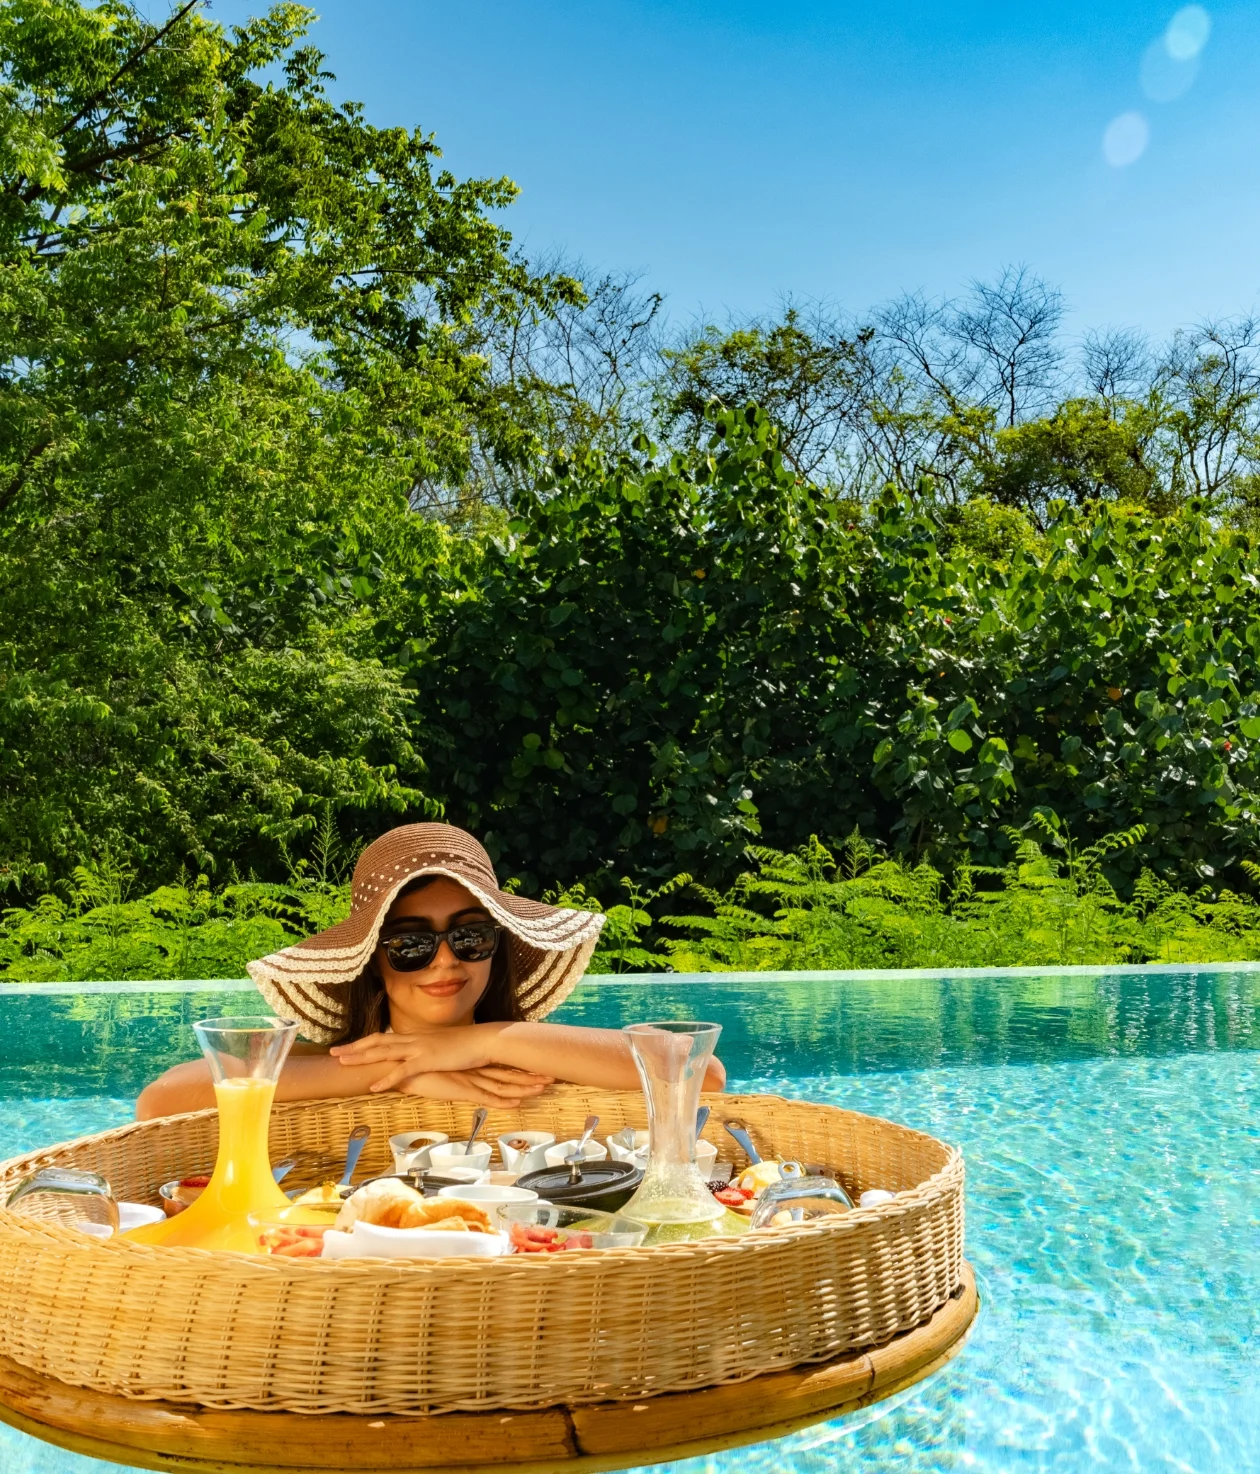 Breakfast in the pool in Armony Luxury Resort & Spa near Puerto Vallarta